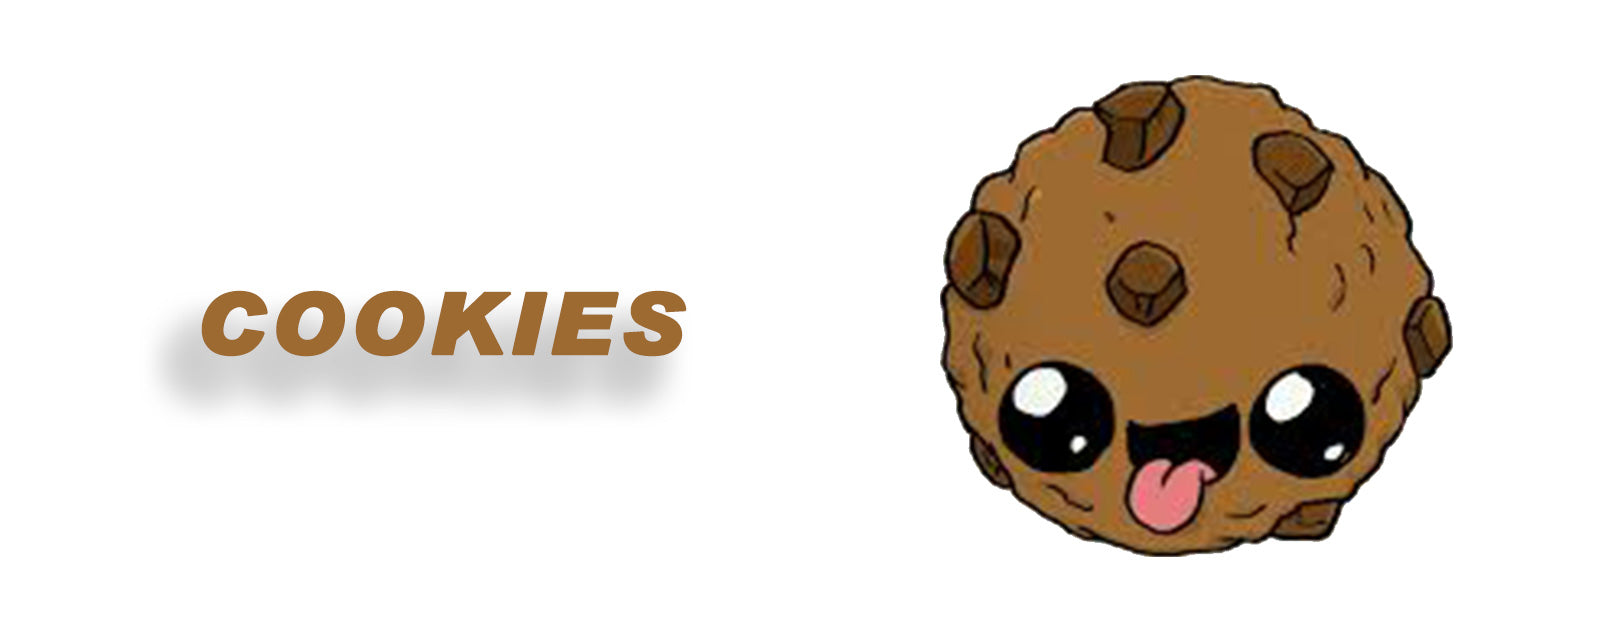 dessin kawaii nourriture cookies